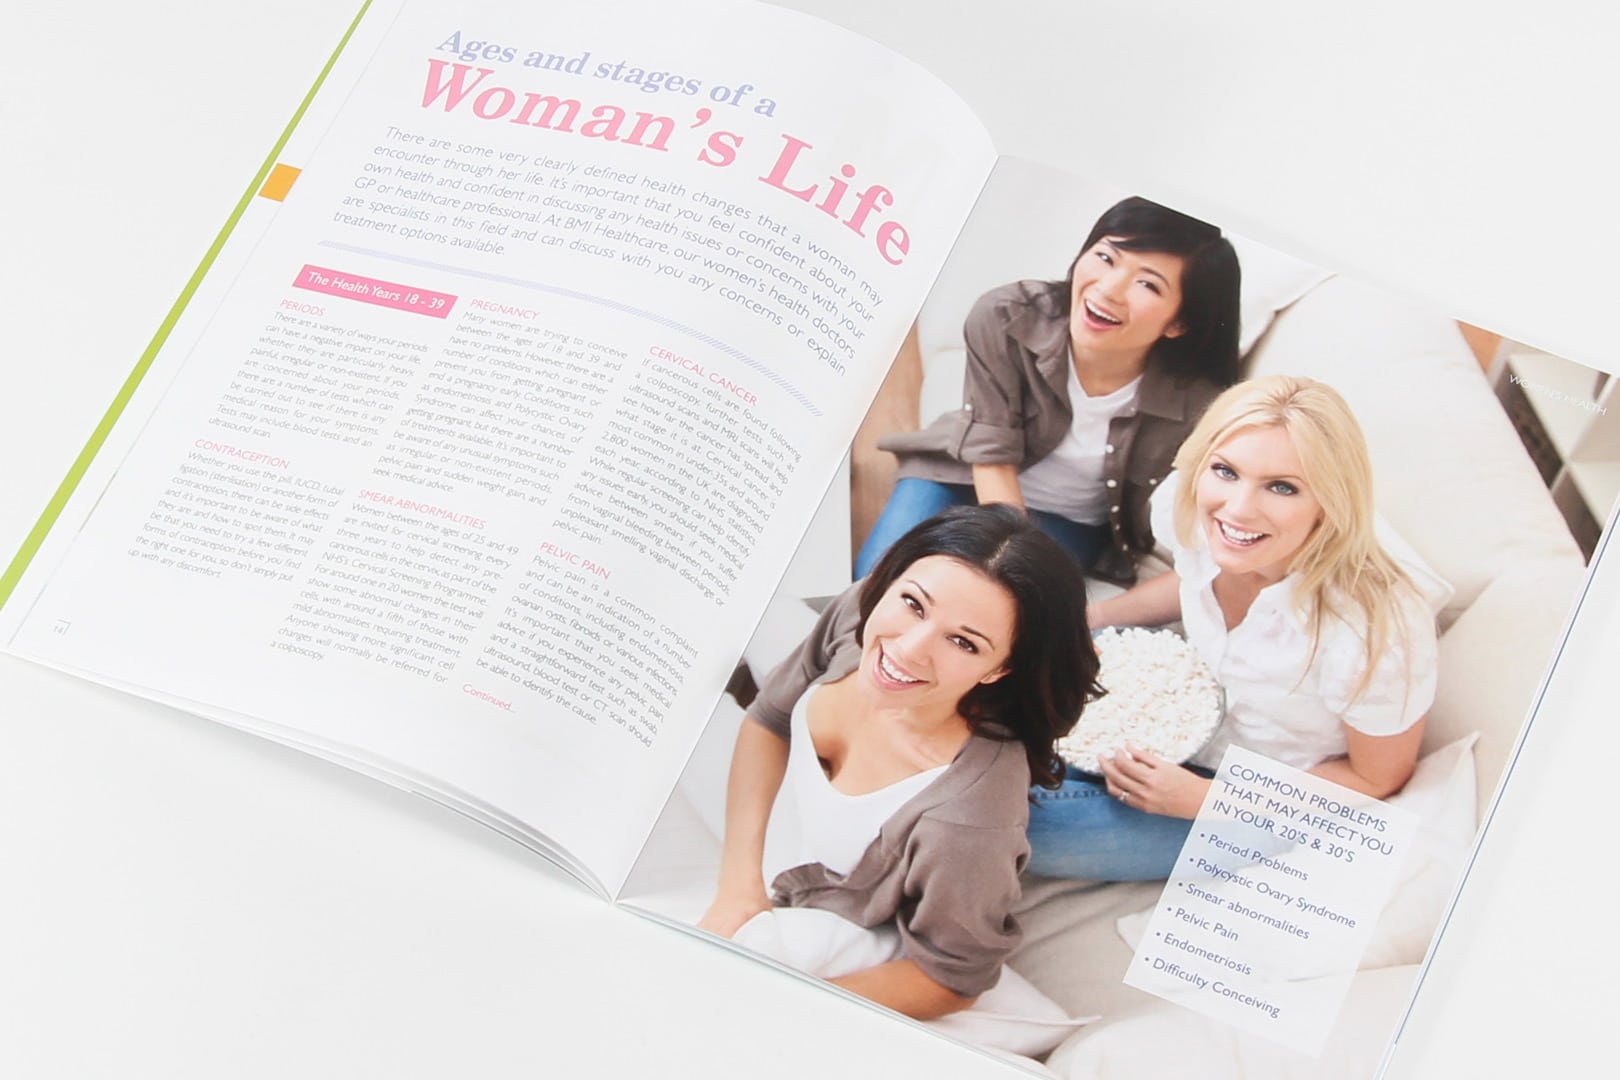 Woman's Health article for BMI Healthcare Magazine